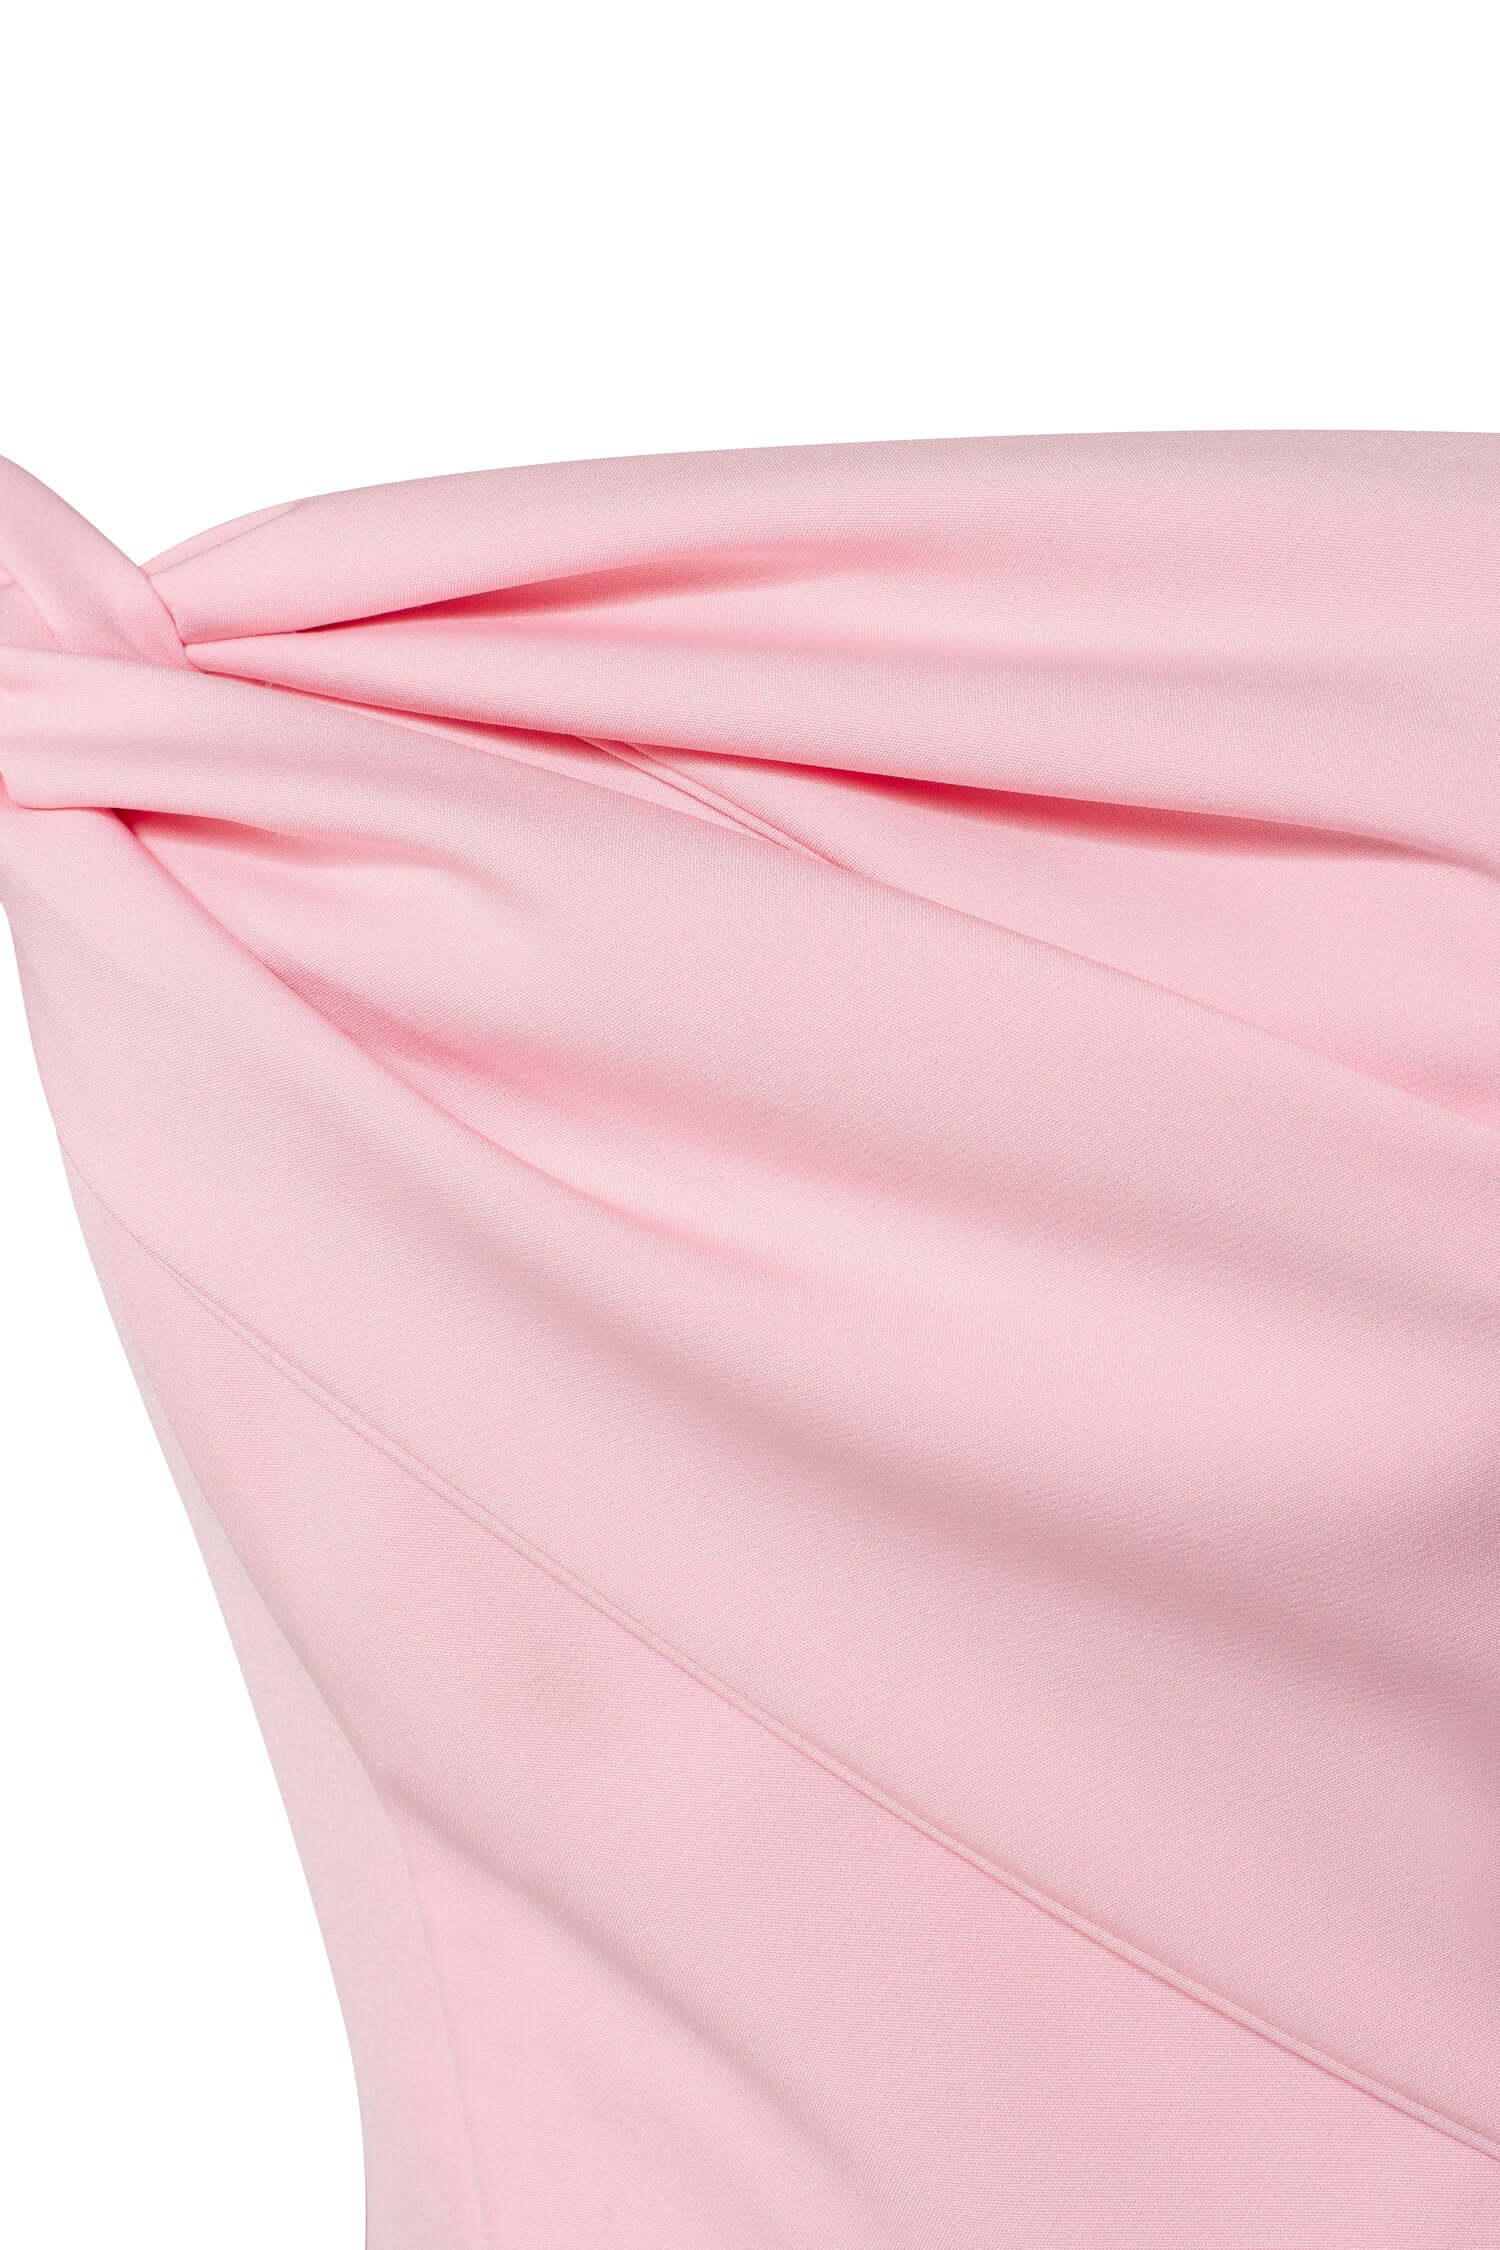 Pink Classy midi dress with open neckline - Milla